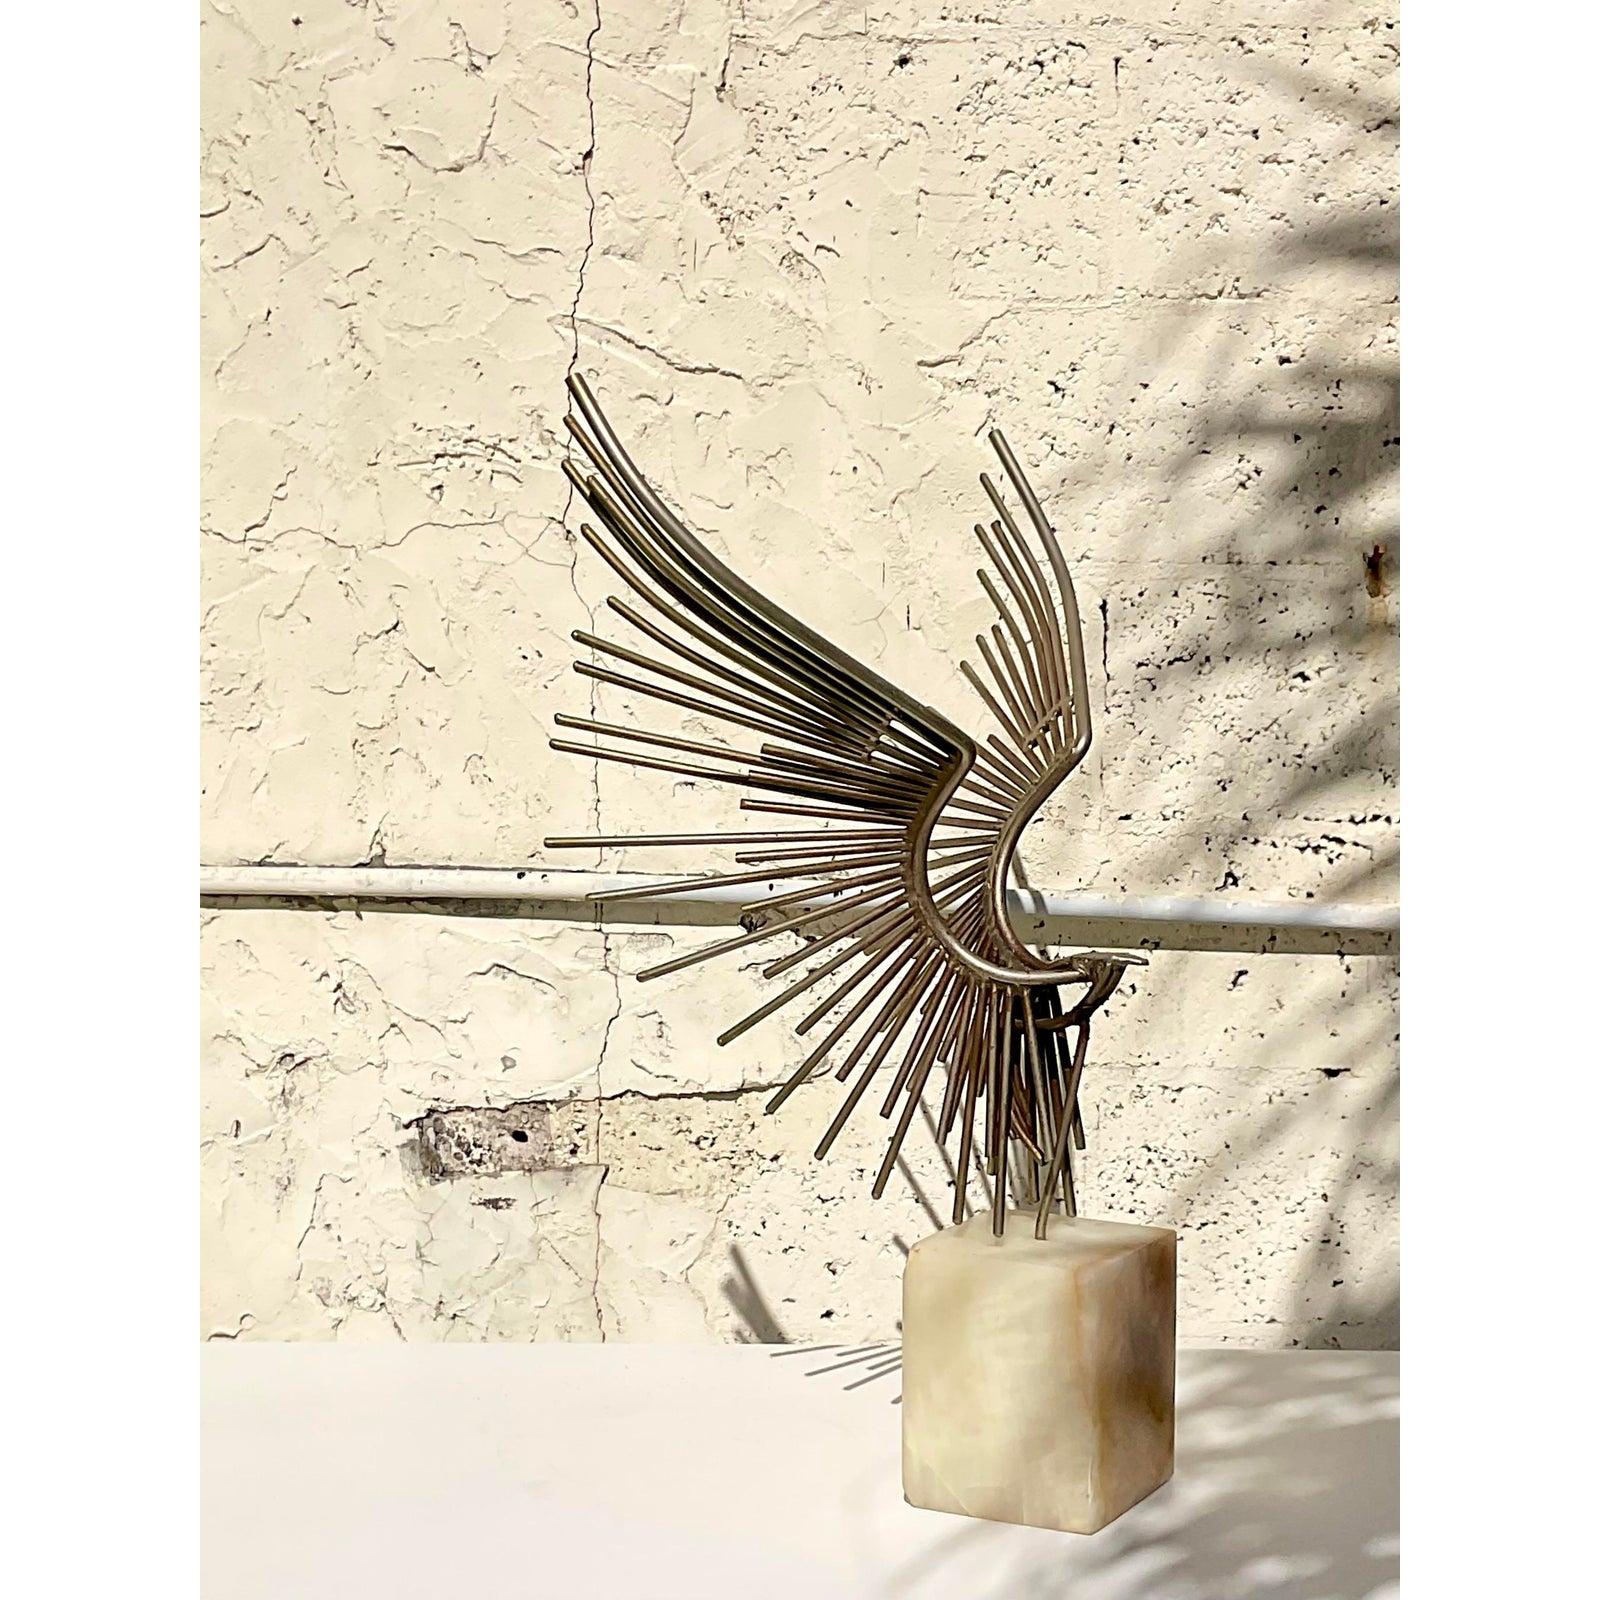 North American Mid-Century Modernist Metal Bird Sculpture After Jere